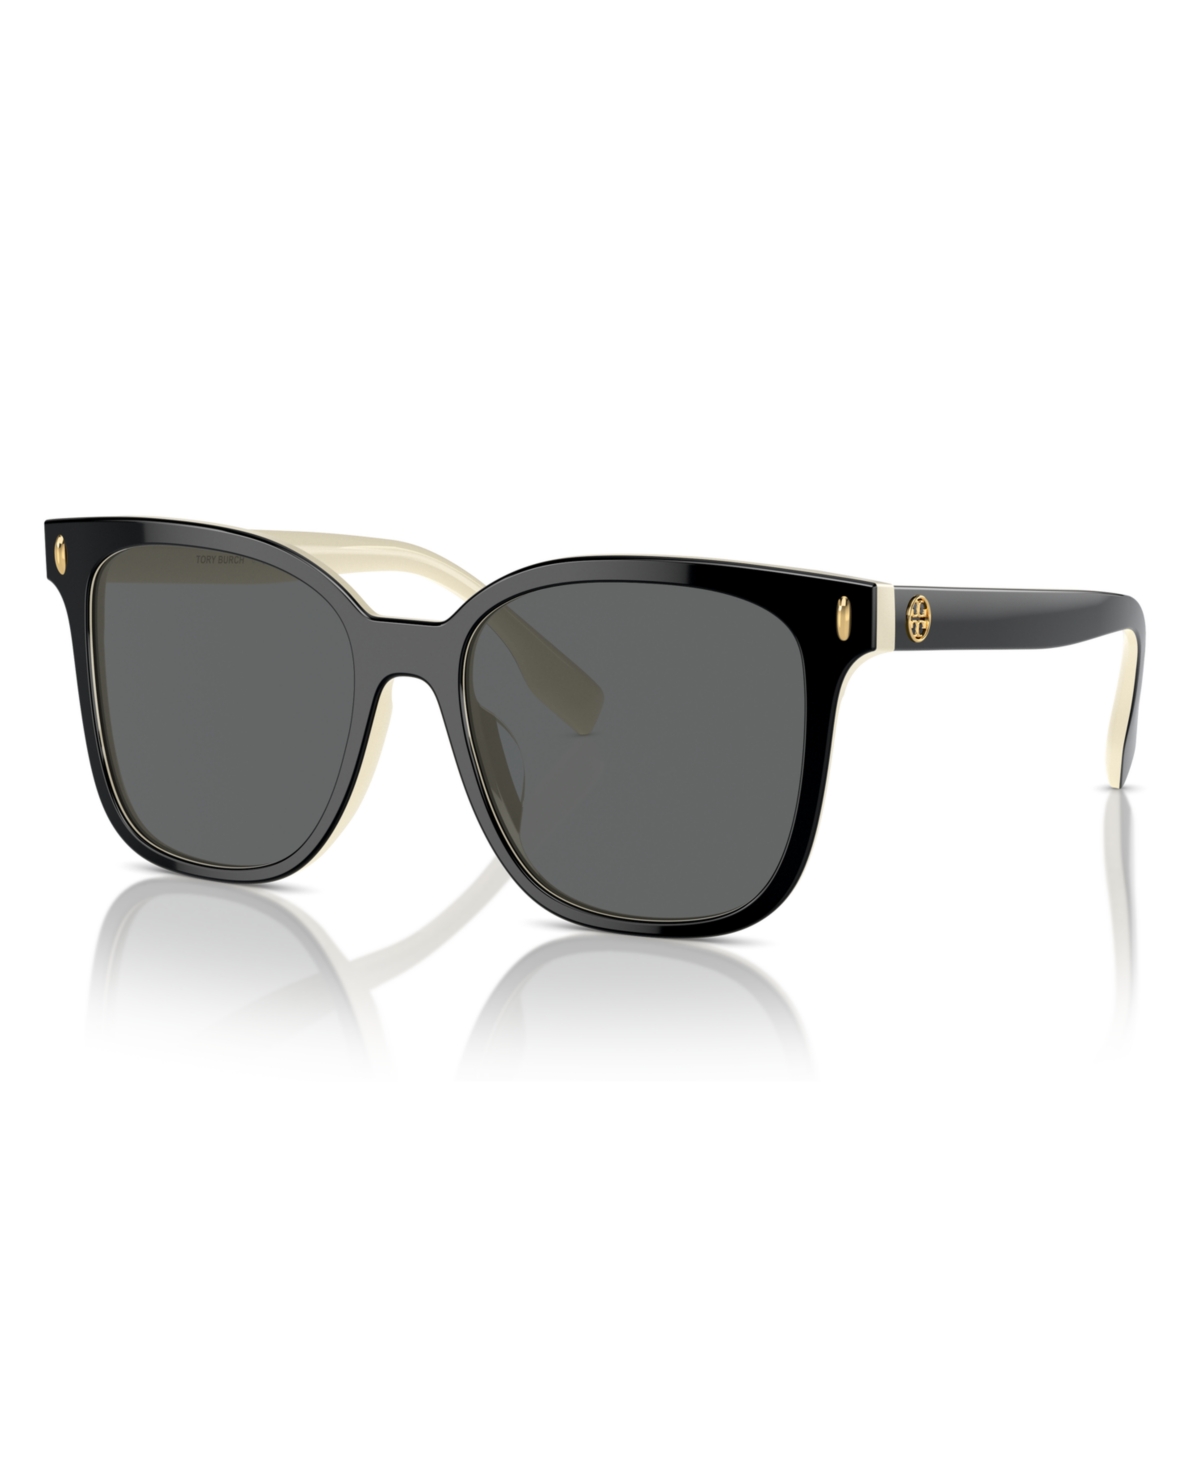 Women's Sunglasses, Ty7203U - Black, Ivory